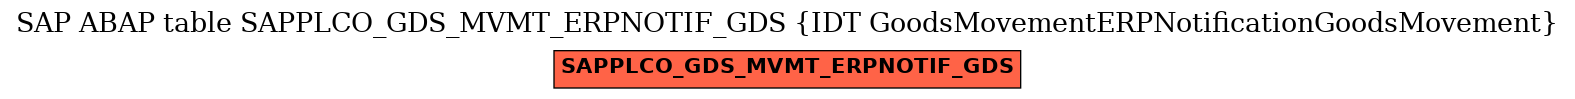 E-R Diagram for table SAPPLCO_GDS_MVMT_ERPNOTIF_GDS (IDT GoodsMovementERPNotificationGoodsMovement)